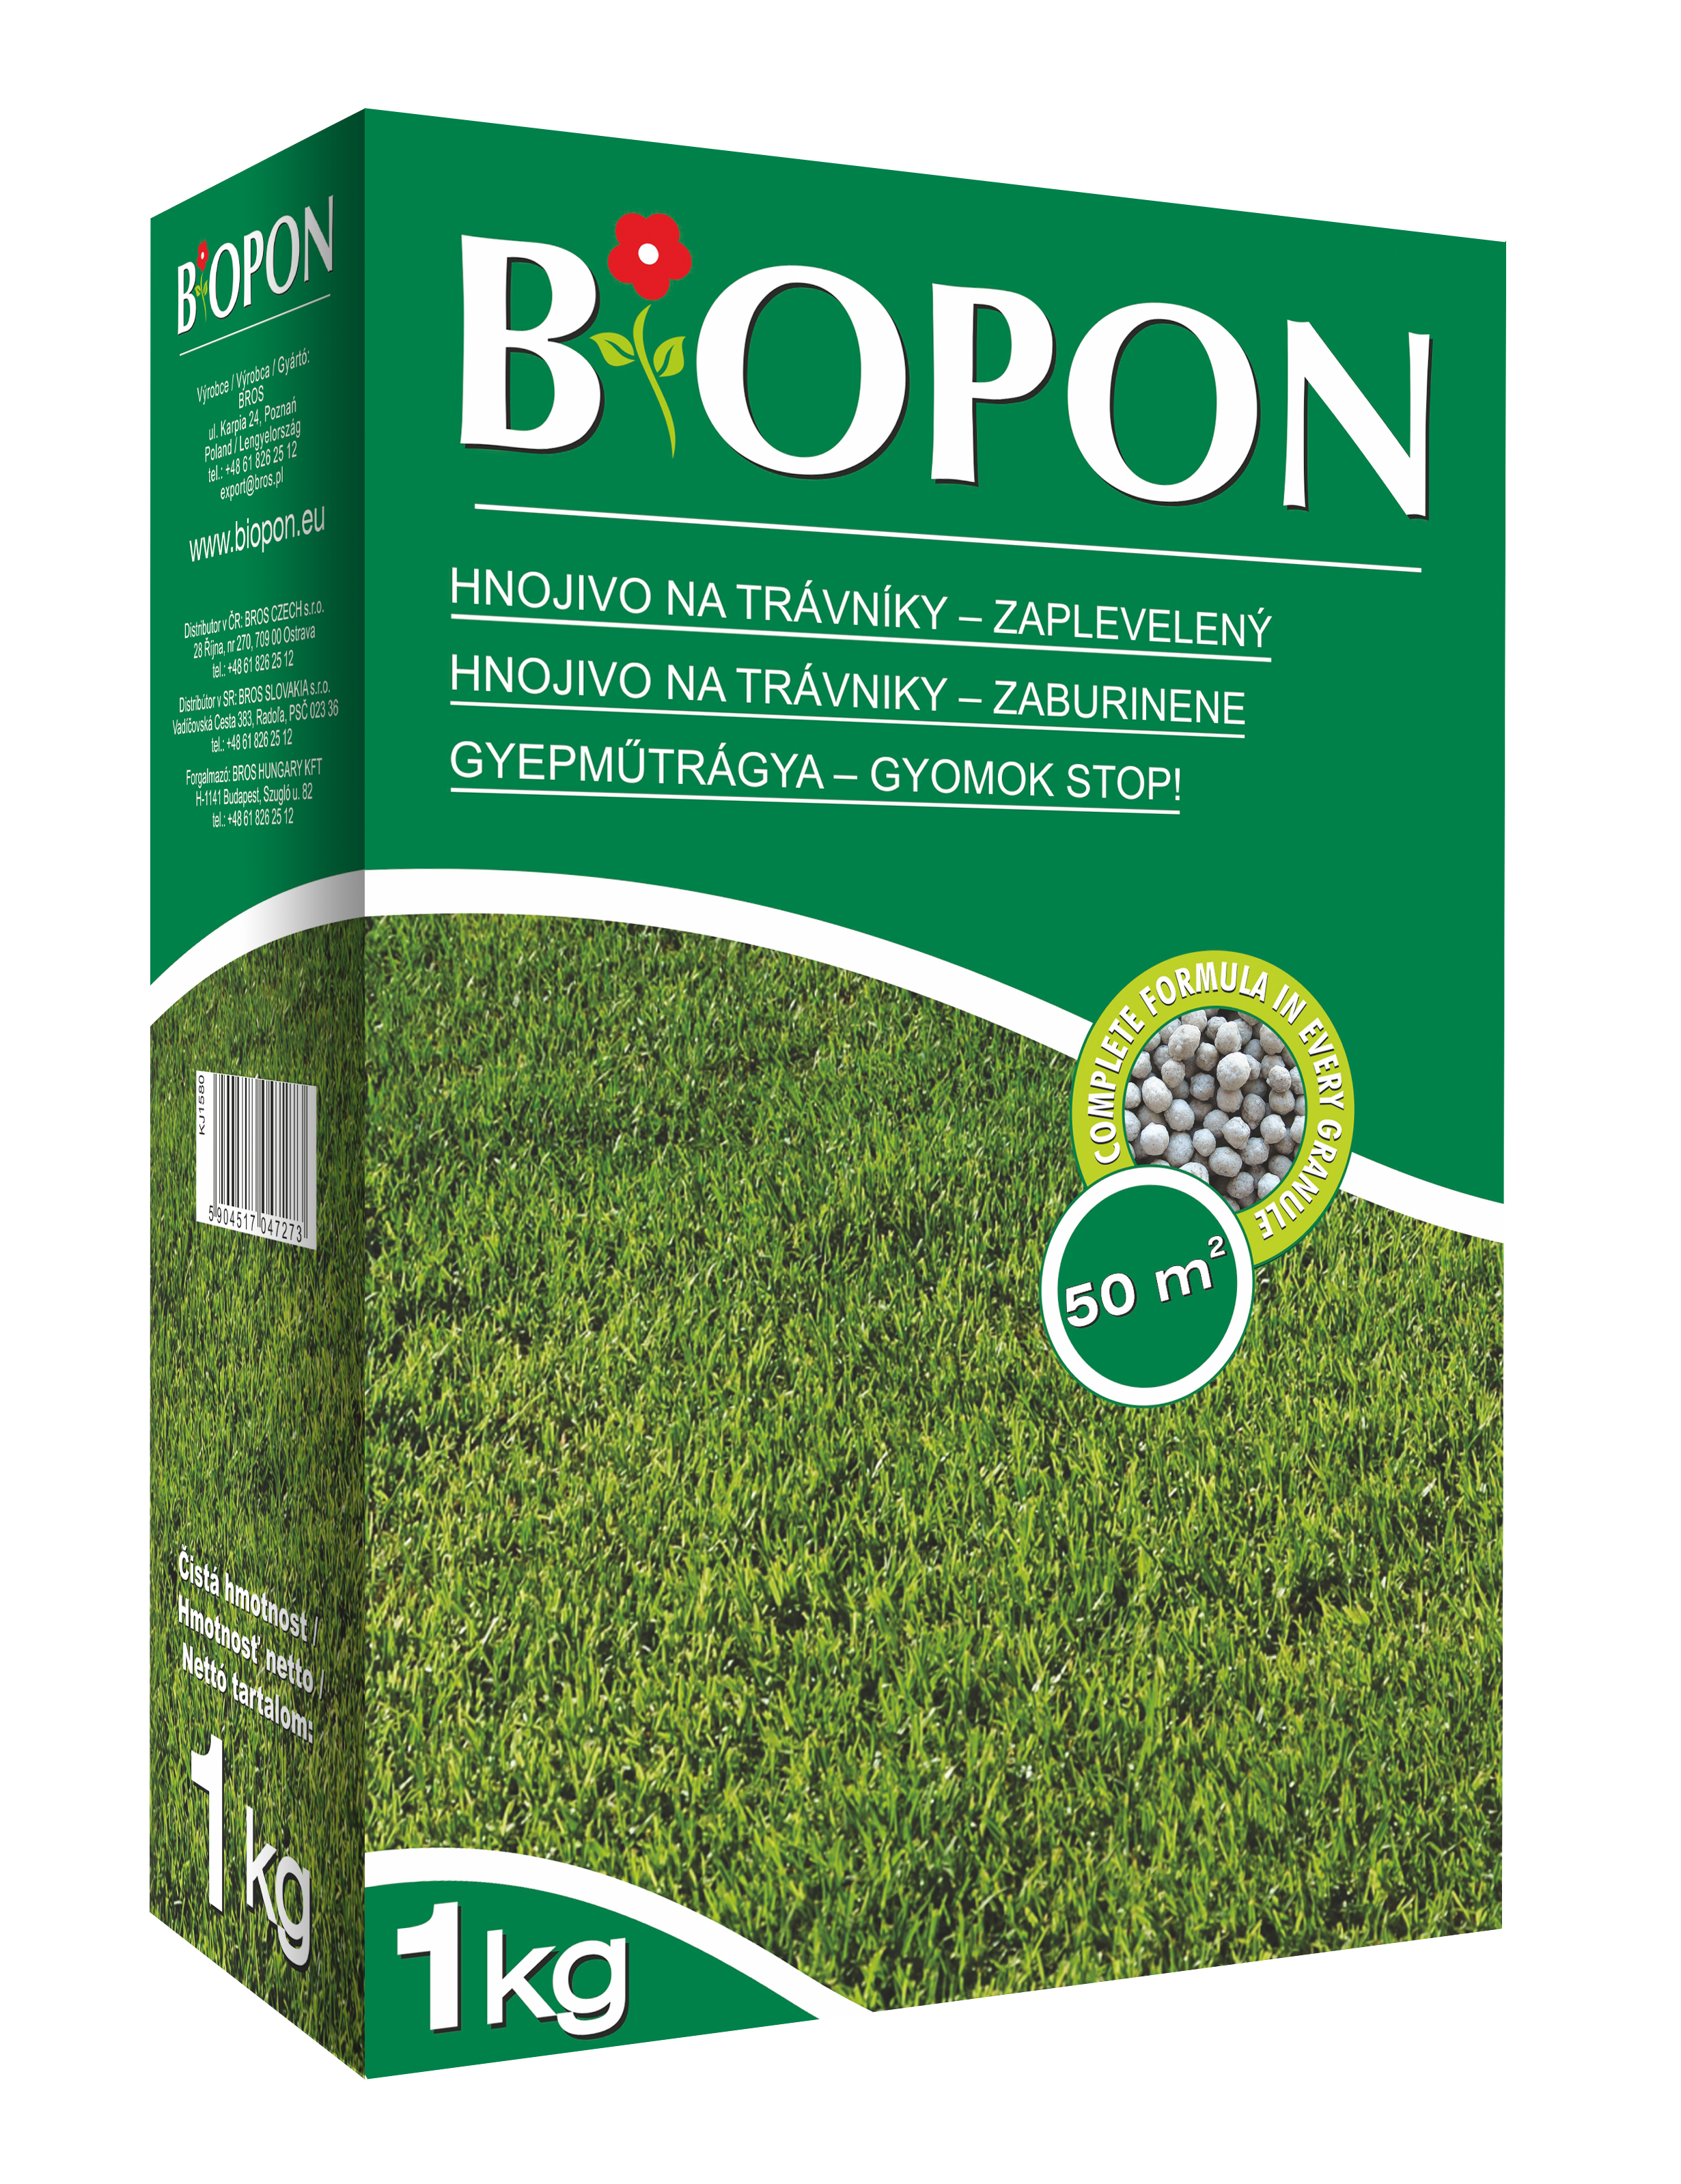 Biopon lawn fertilizer weed-stop 1 kg